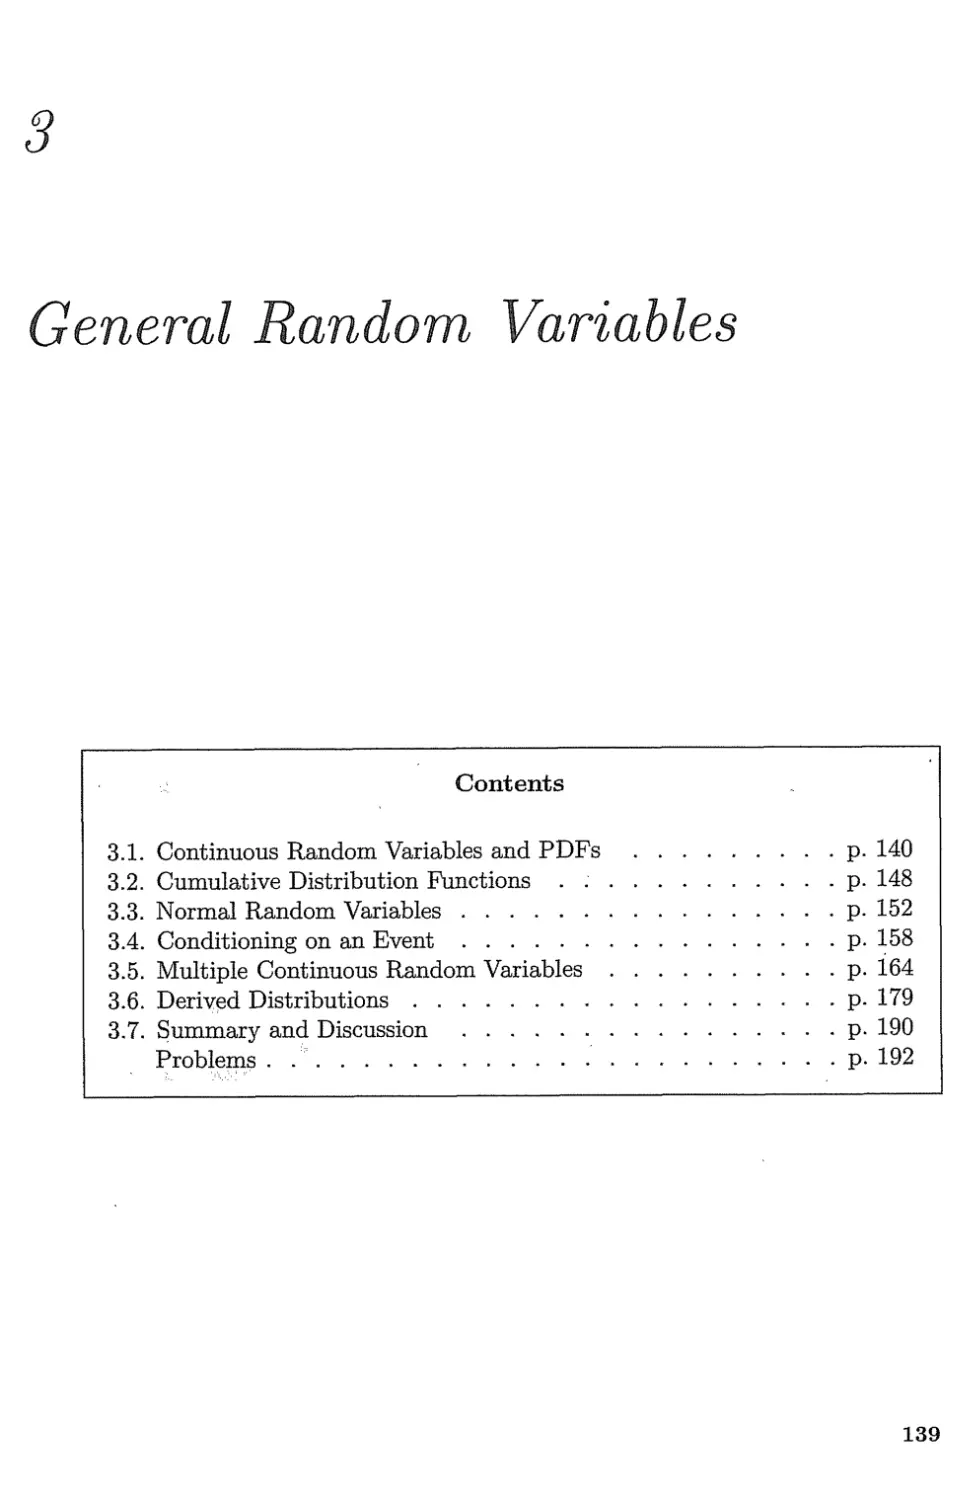 Chapter 3-General Random Variables